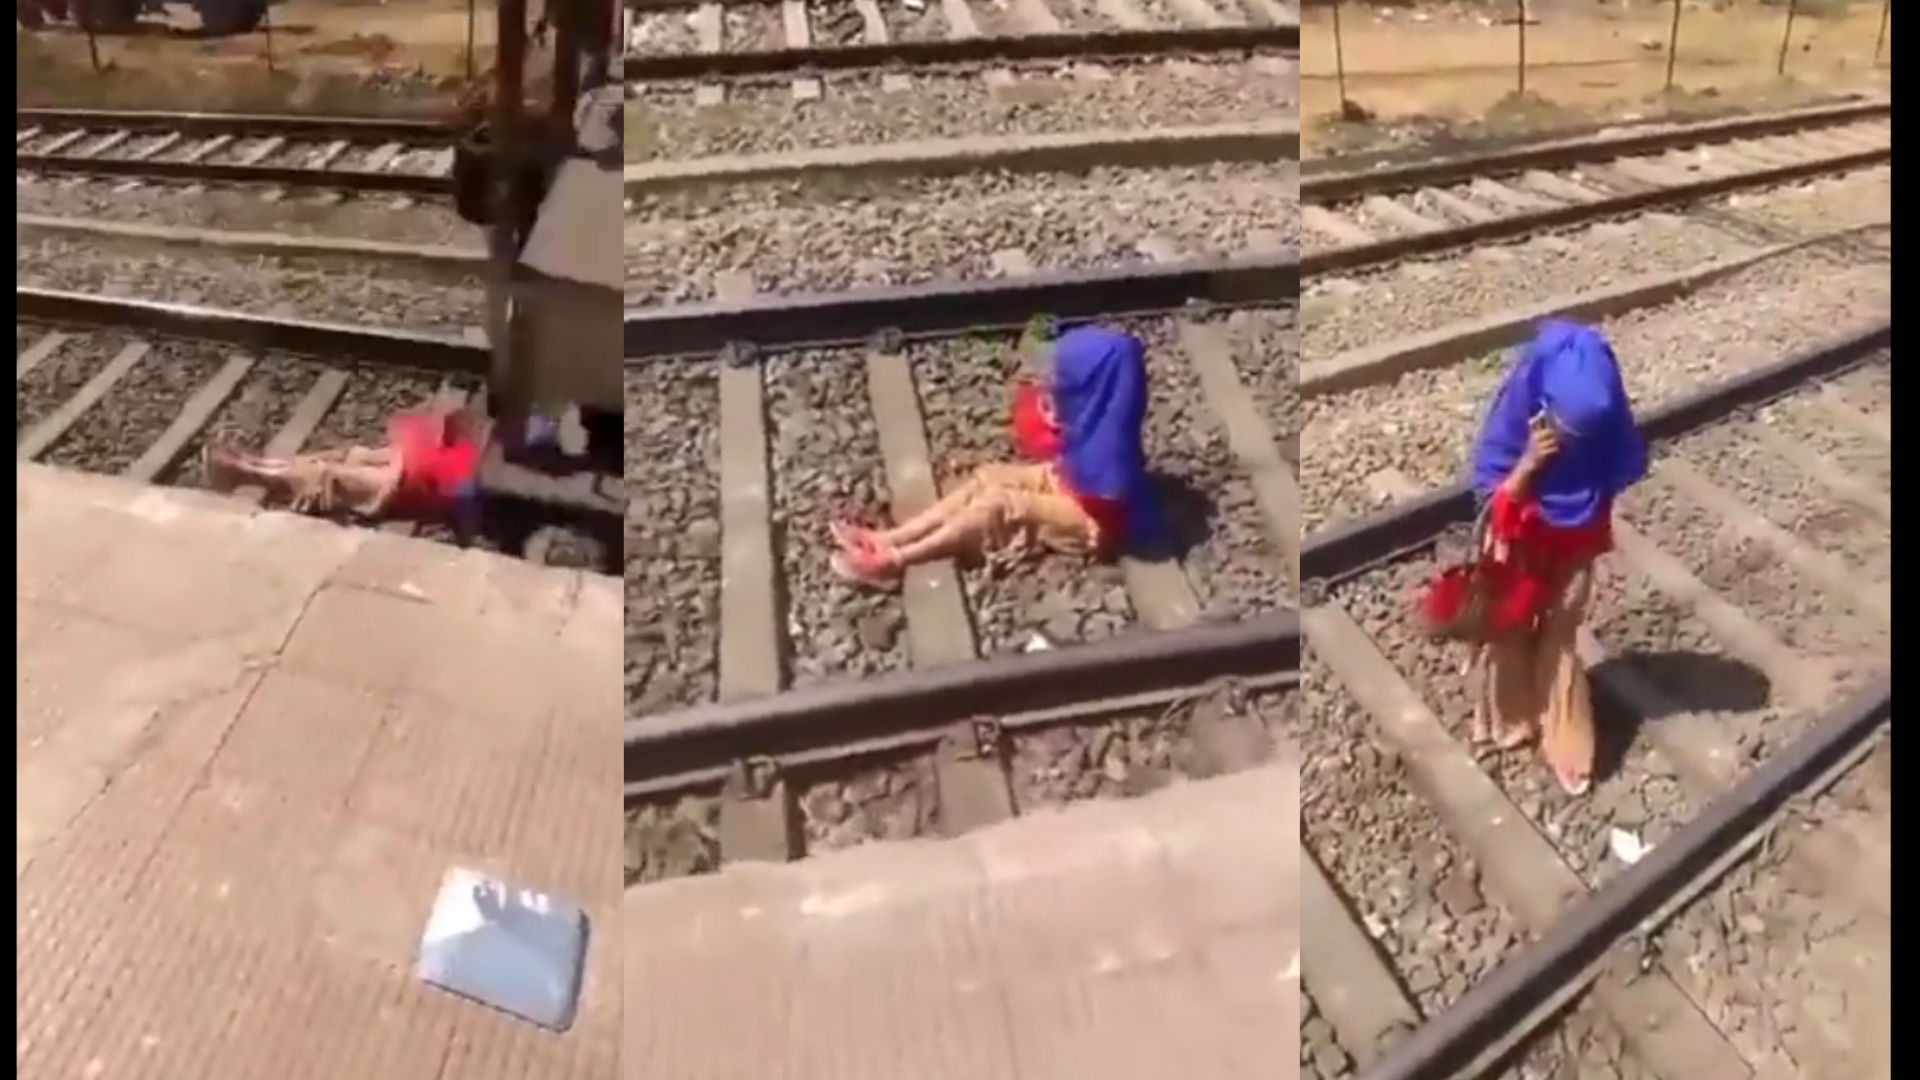 ‘Gossip zaroori hai’: Woman answers phone call as train passes over her